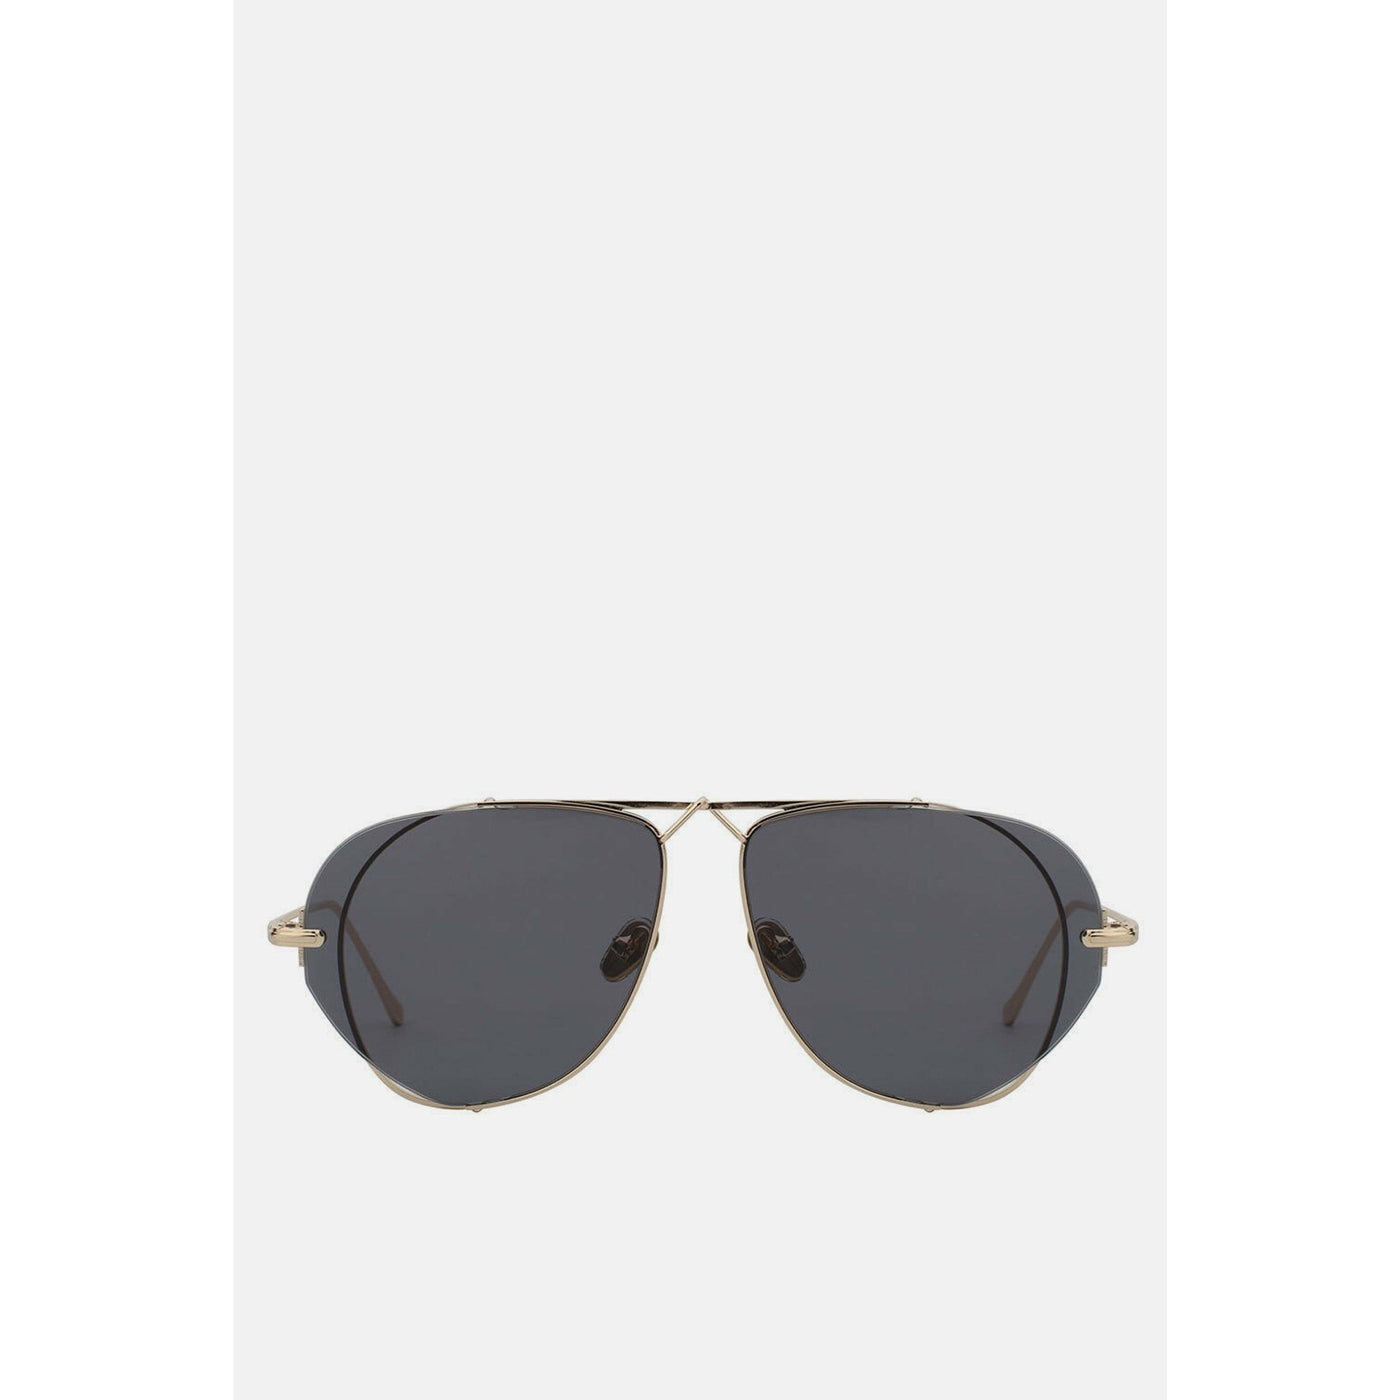 Cannes Black Sunglasses